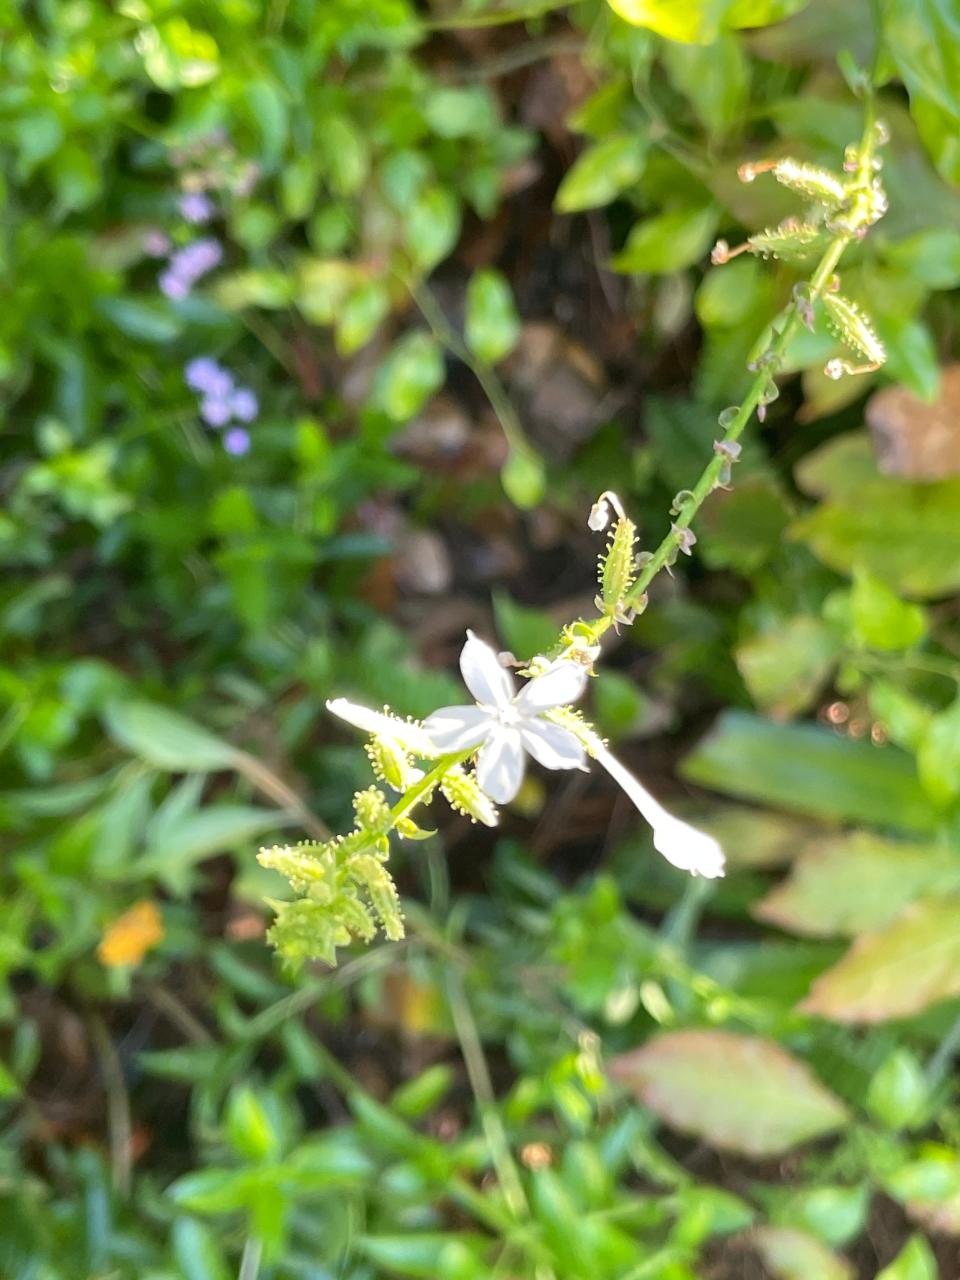 This plumbago plant generates delicate white flowers.